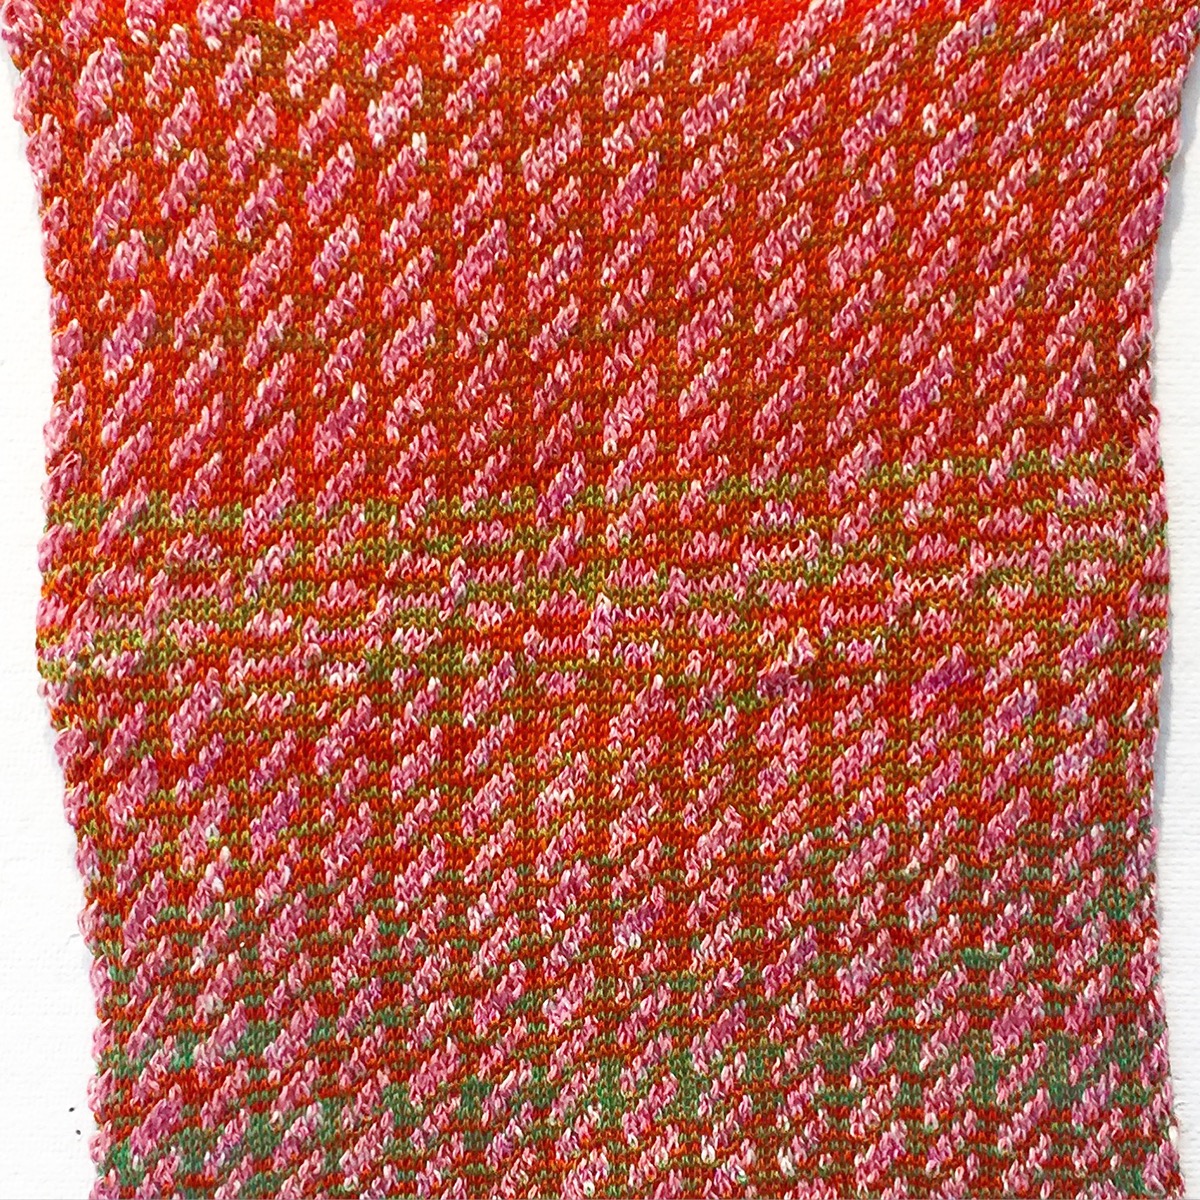 Textiles machineknitting knitting fabric yarn pattern surfacedesign